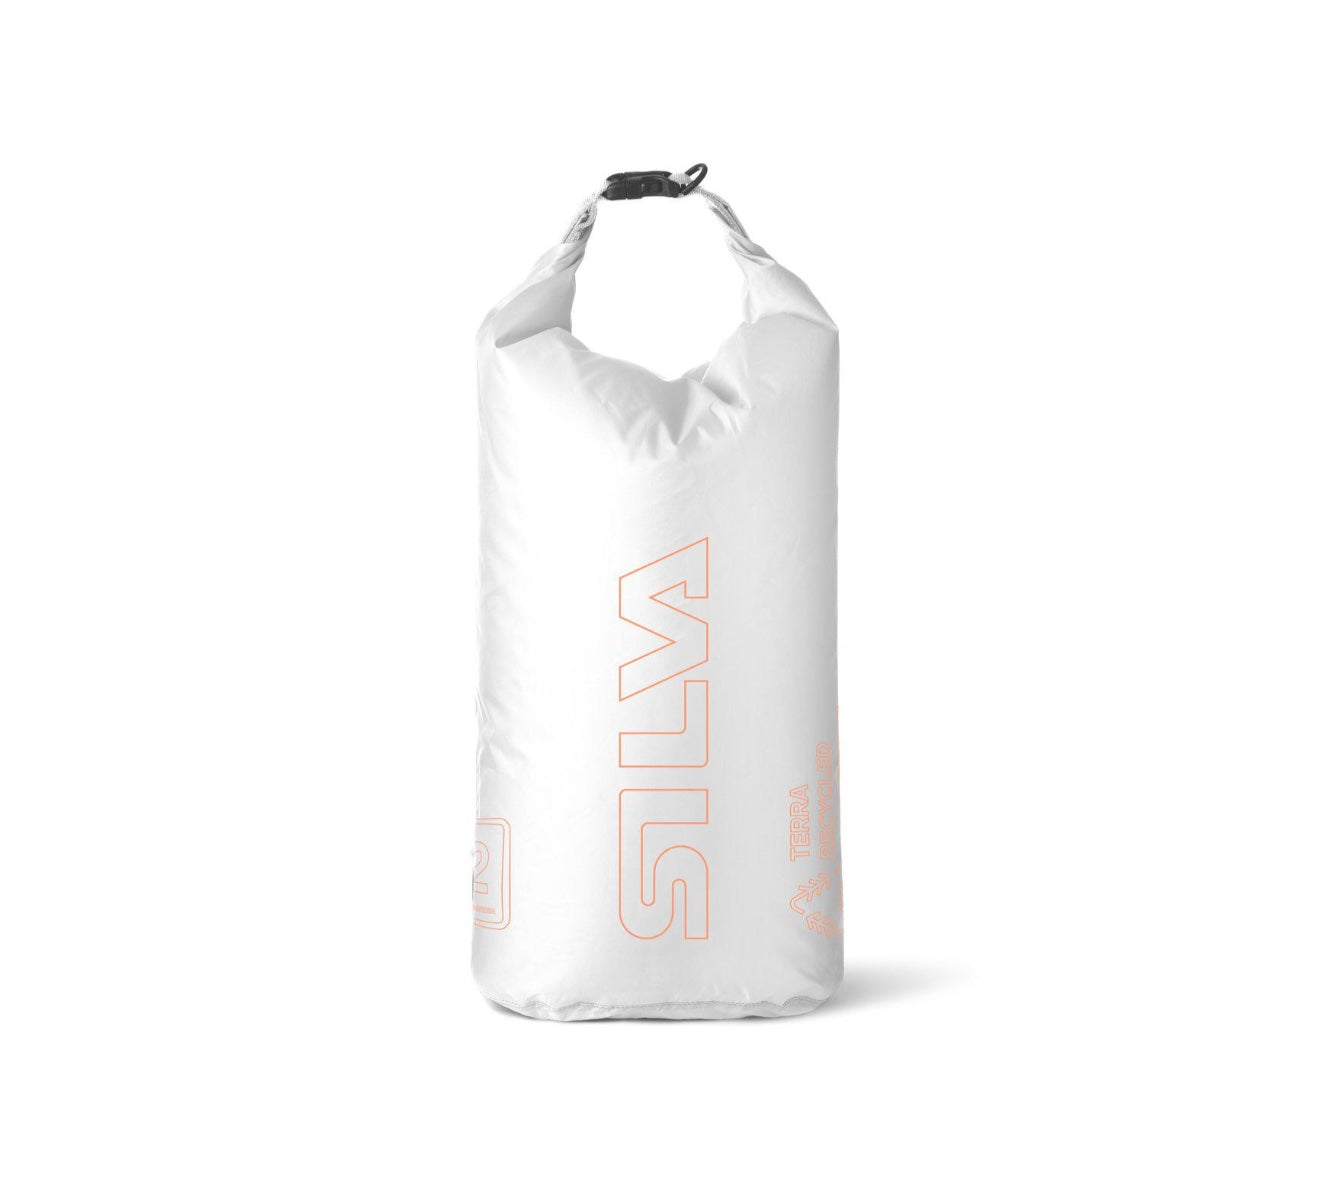 Silva 12L Terra Dry Bag